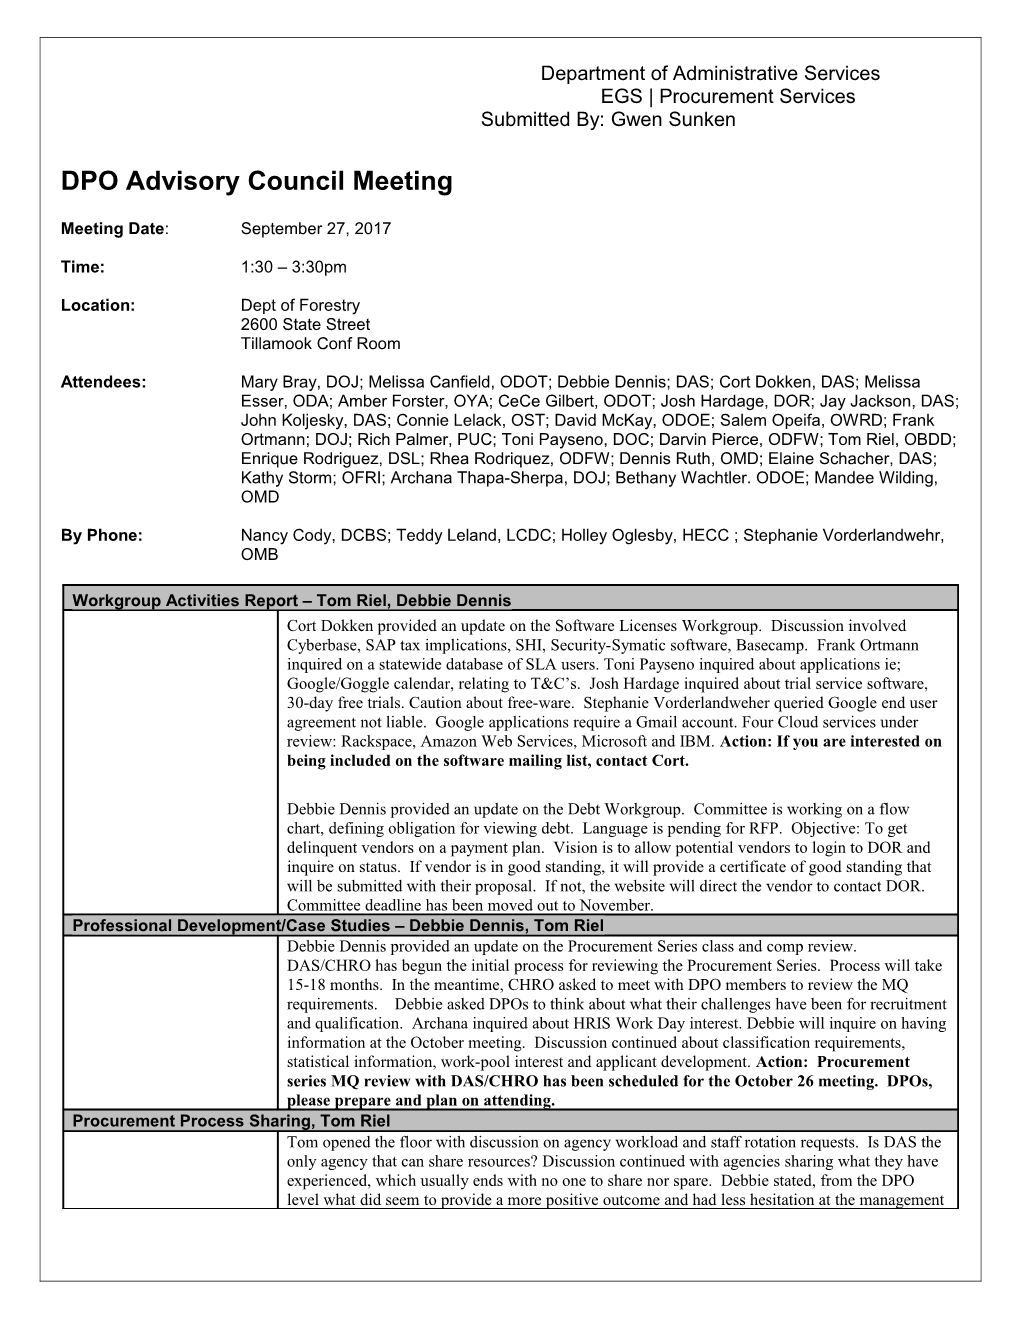 DPO Council Minutes September 2017